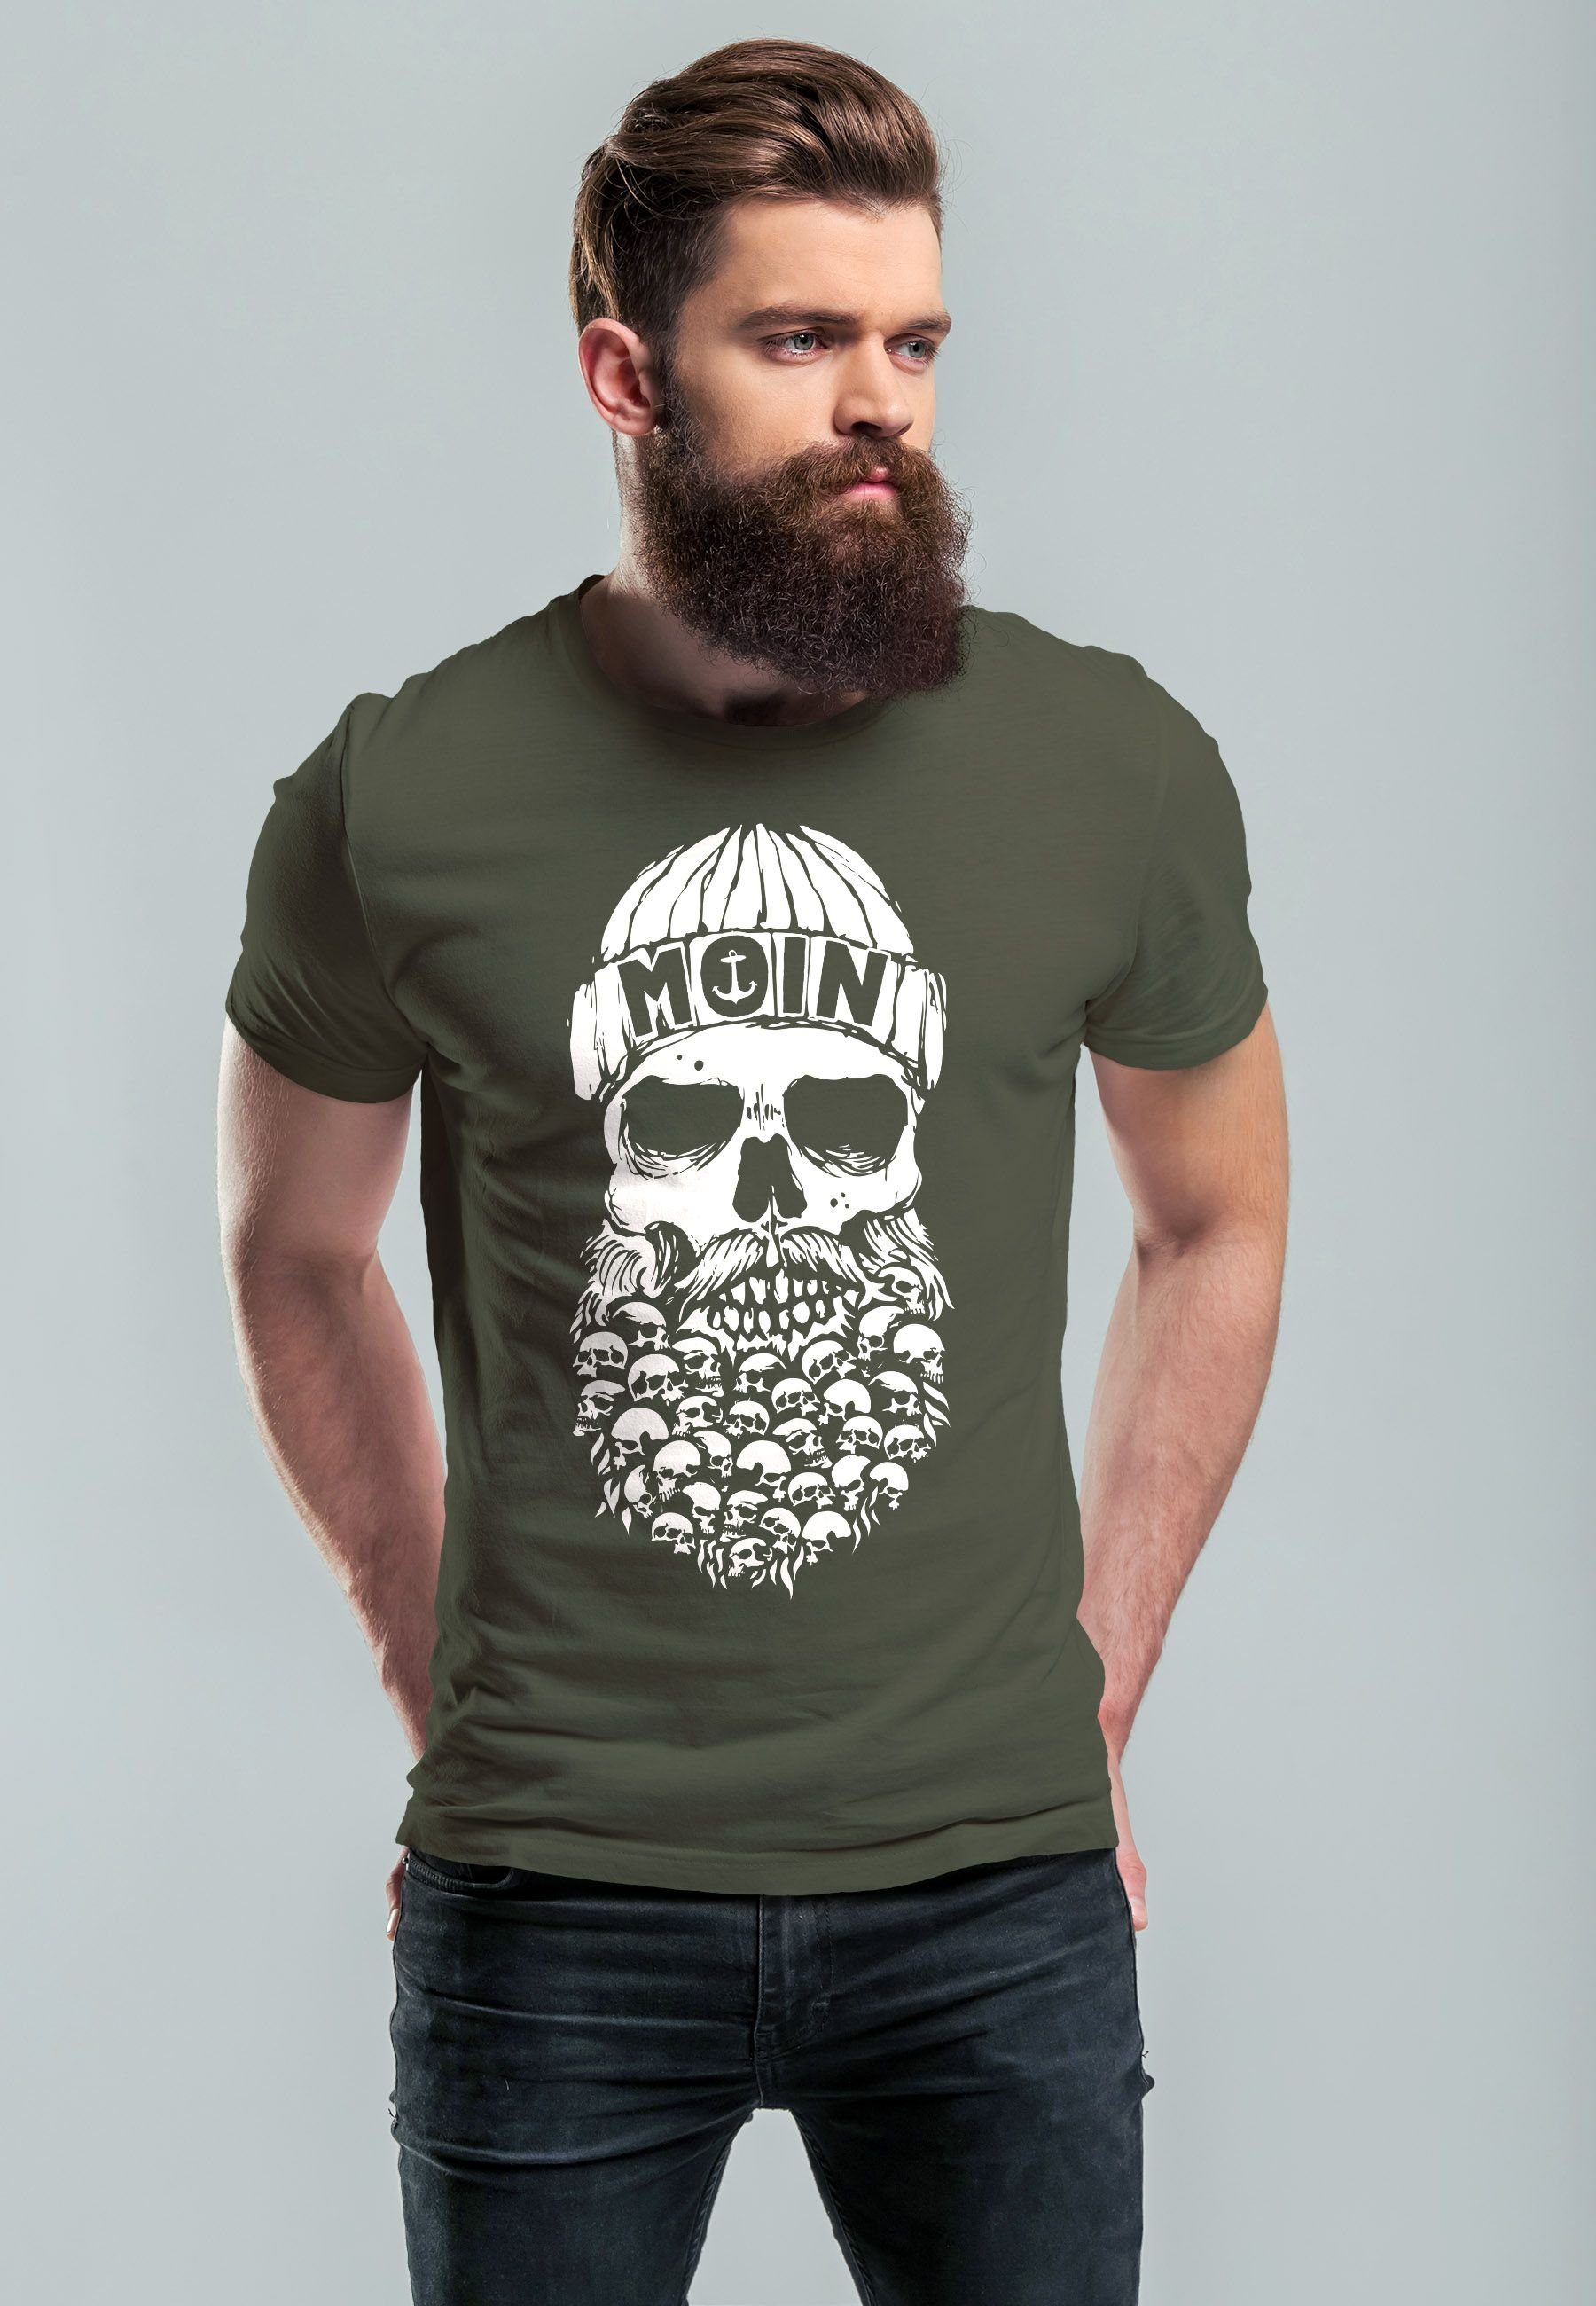 T-Shirt Moin Nordisch Hamburg mit Fas Print Print-Shirt Herren Totenkopf Skull army Dialekt Anker Neverless